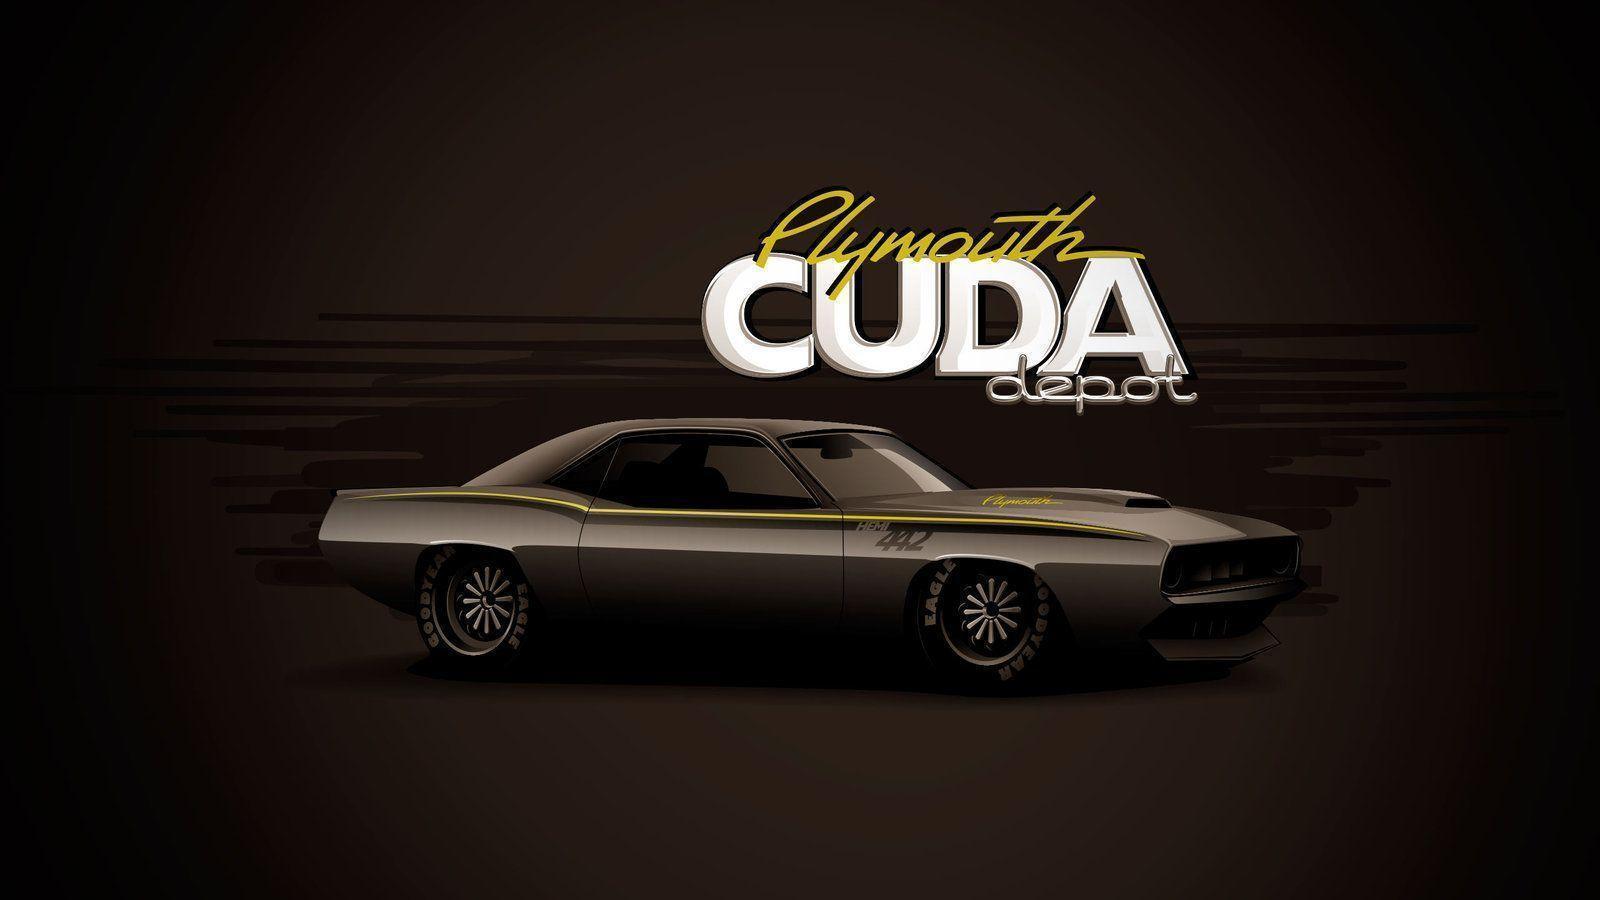 Plymouth Cuda Vector By Depot Hdm